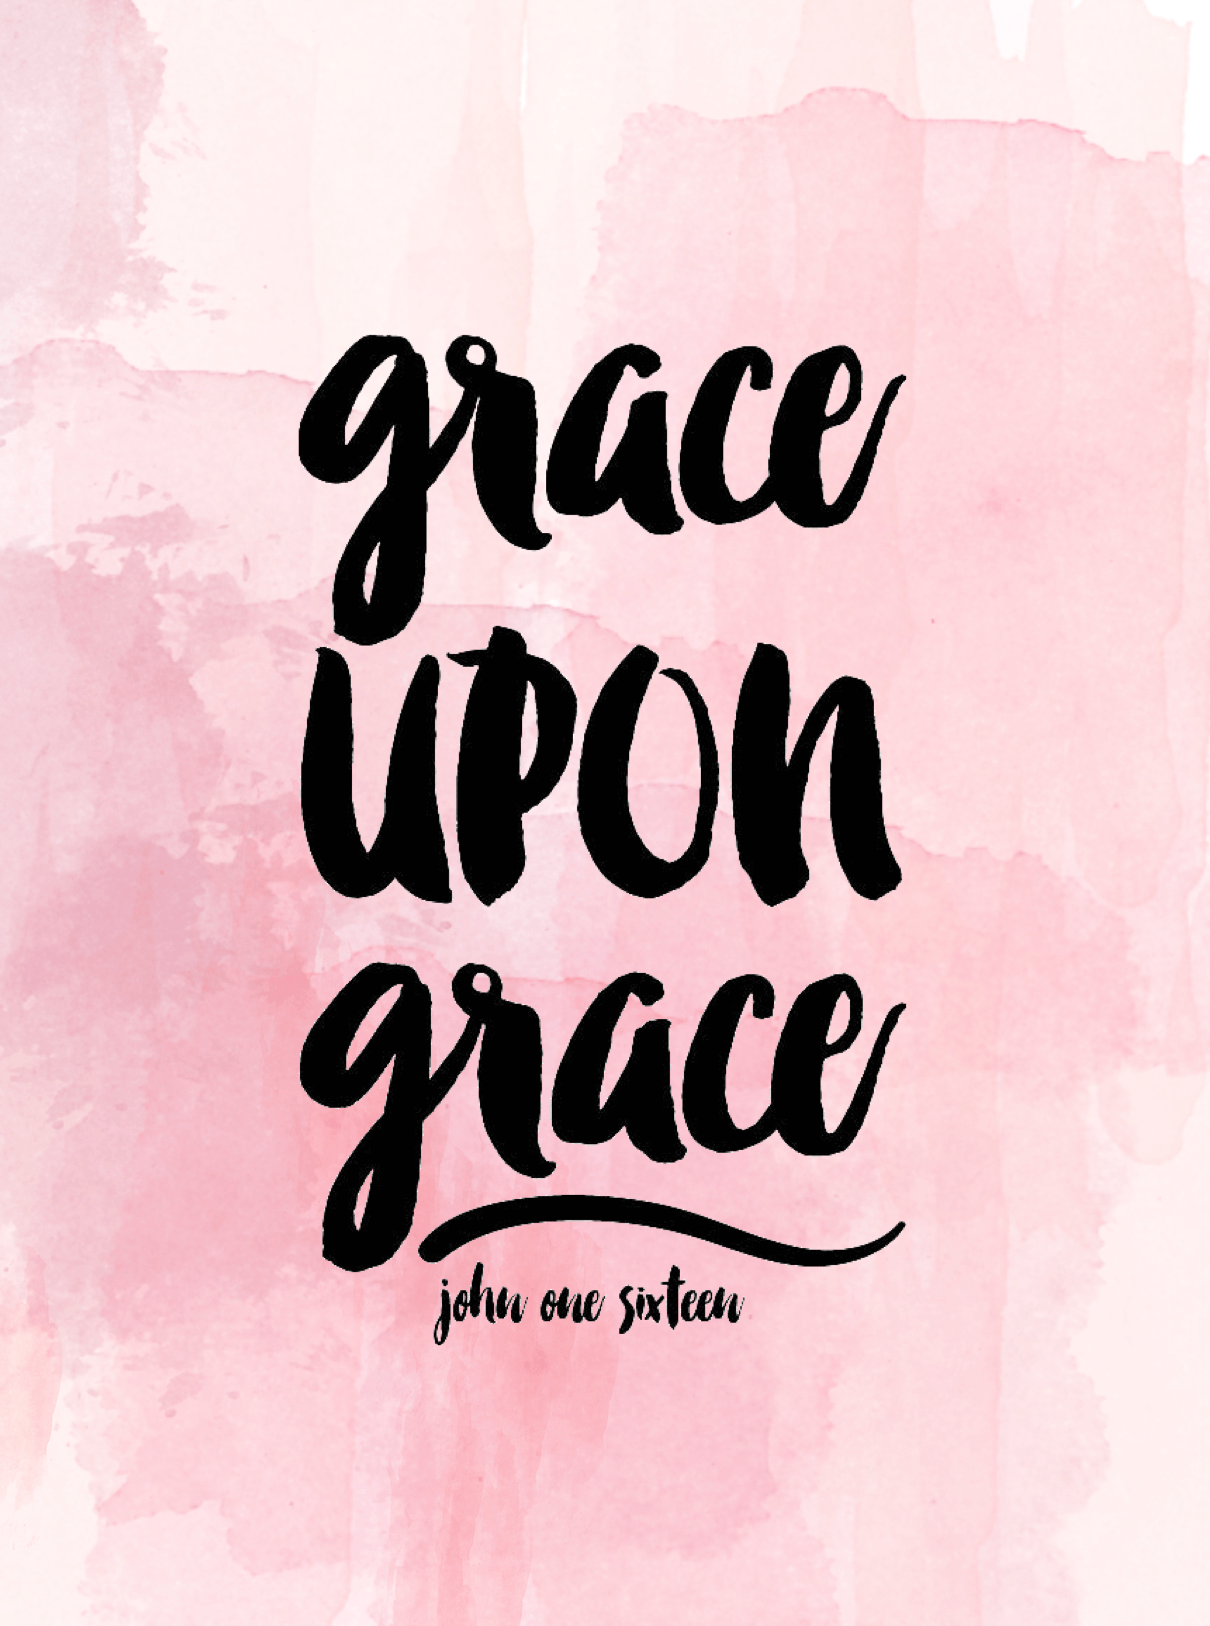 grace upon grace John 1:16 wallpaper. christian wallpaper, bible